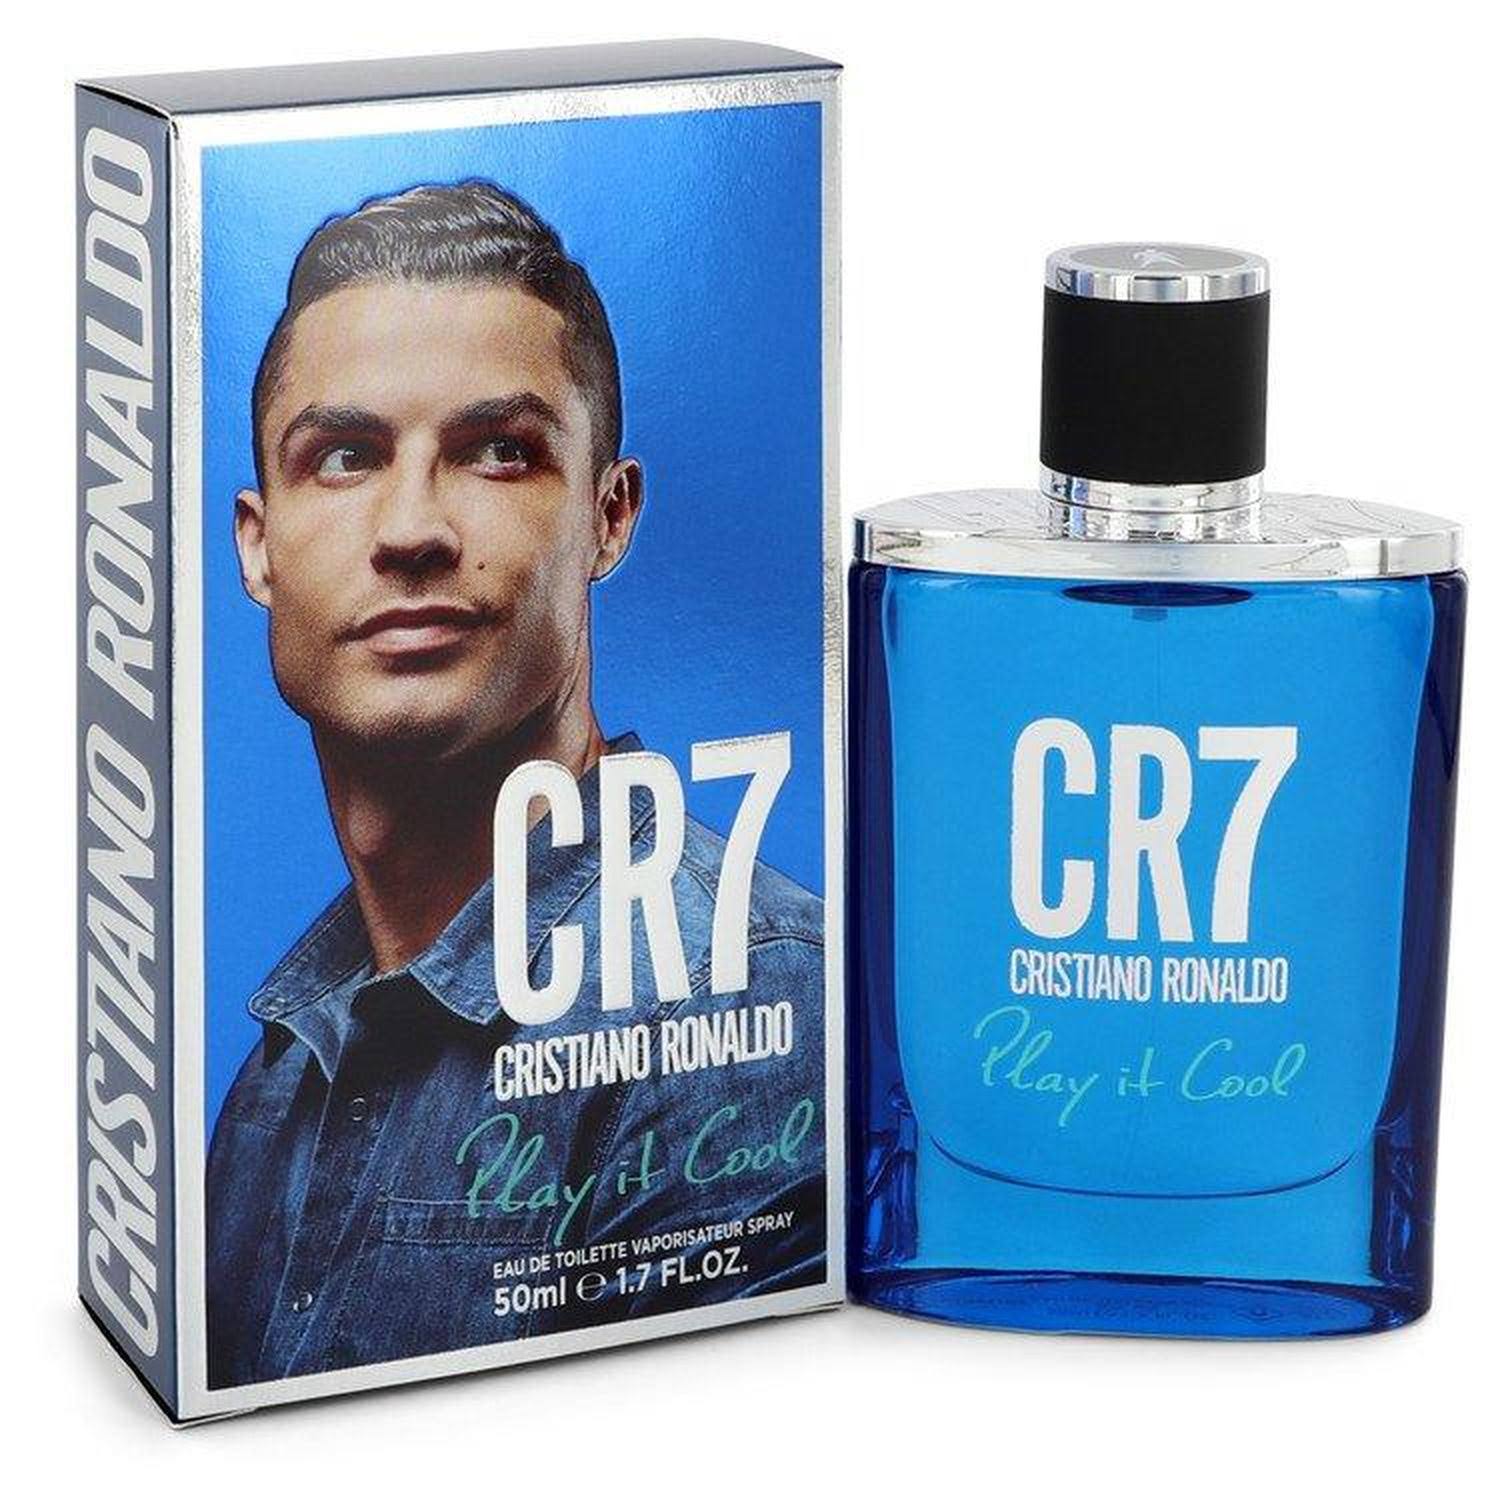 CR7 Play It Cool by Cristiano Ronaldo Eau De Toilette Spray for Men, 1.7 oz